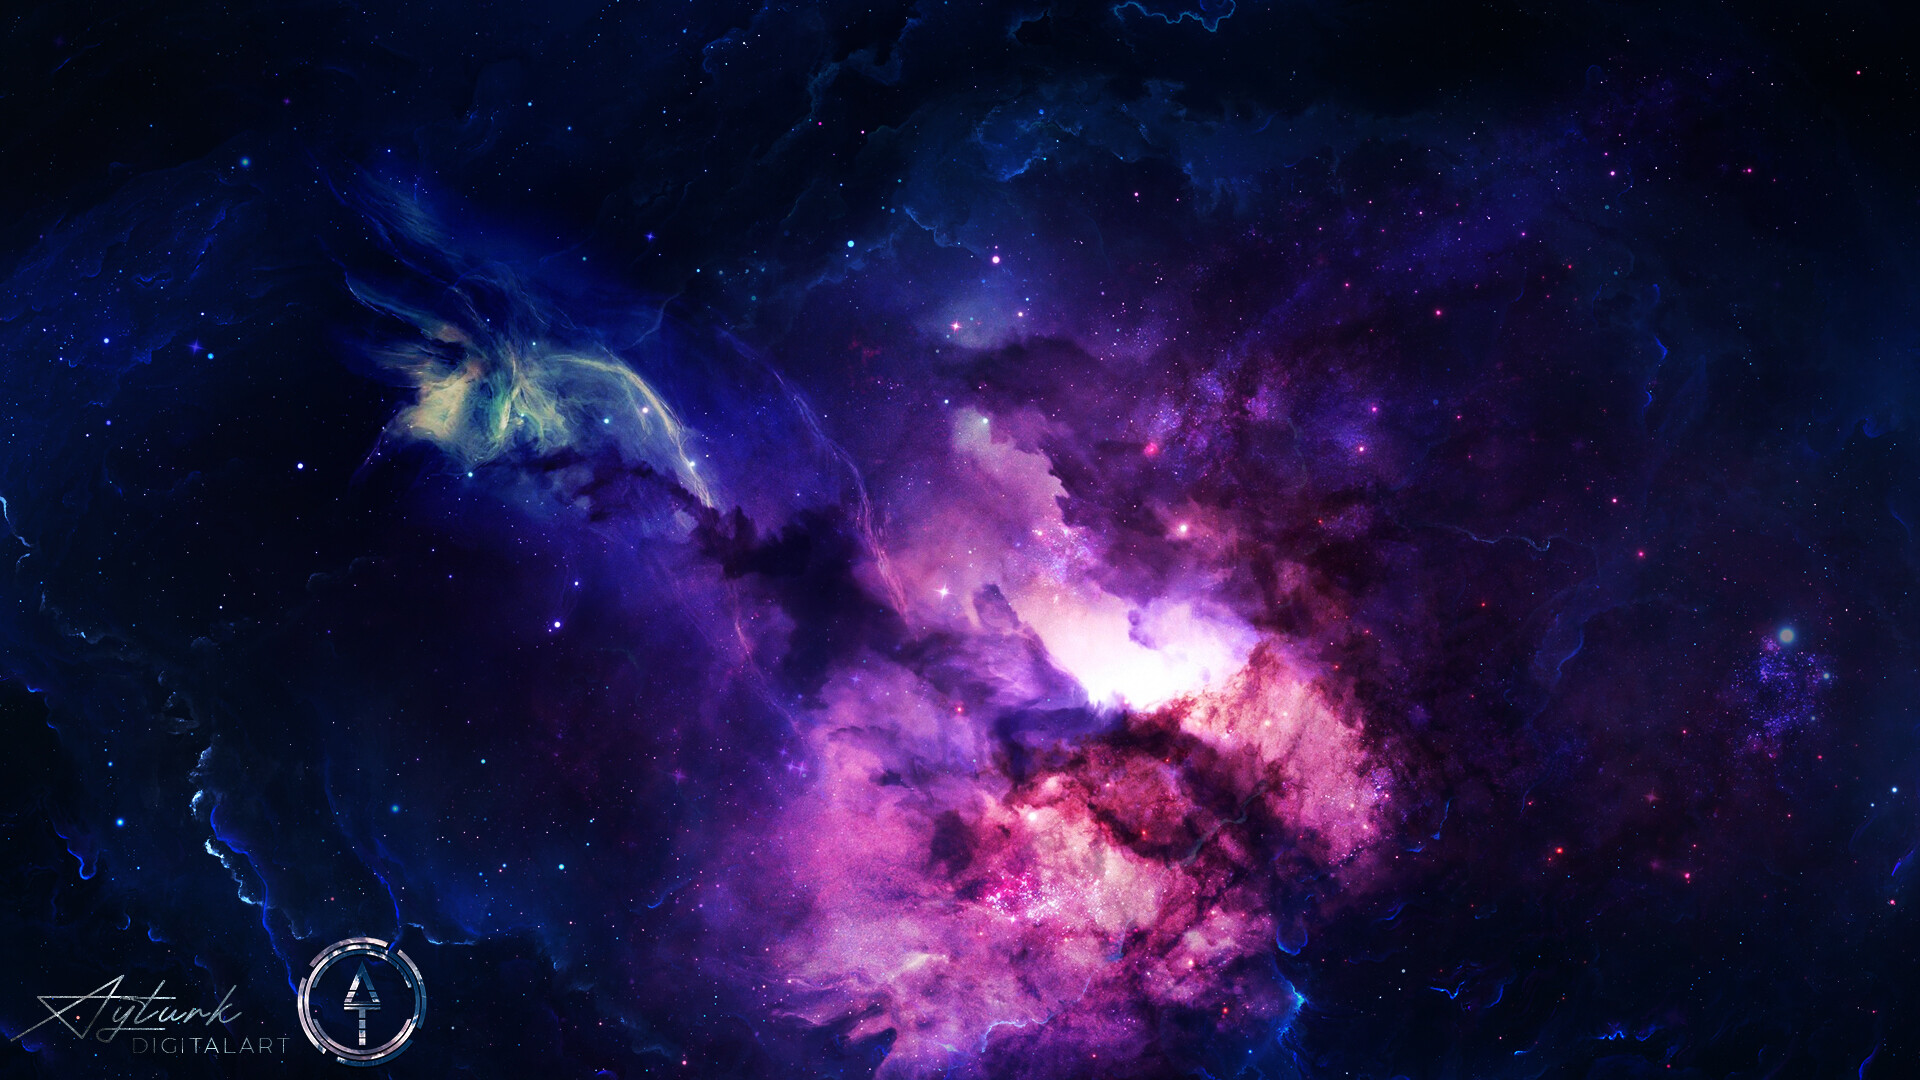 Download Ayturk Digitalart - Galaxy - 4k Space Desktop Backgrounds On